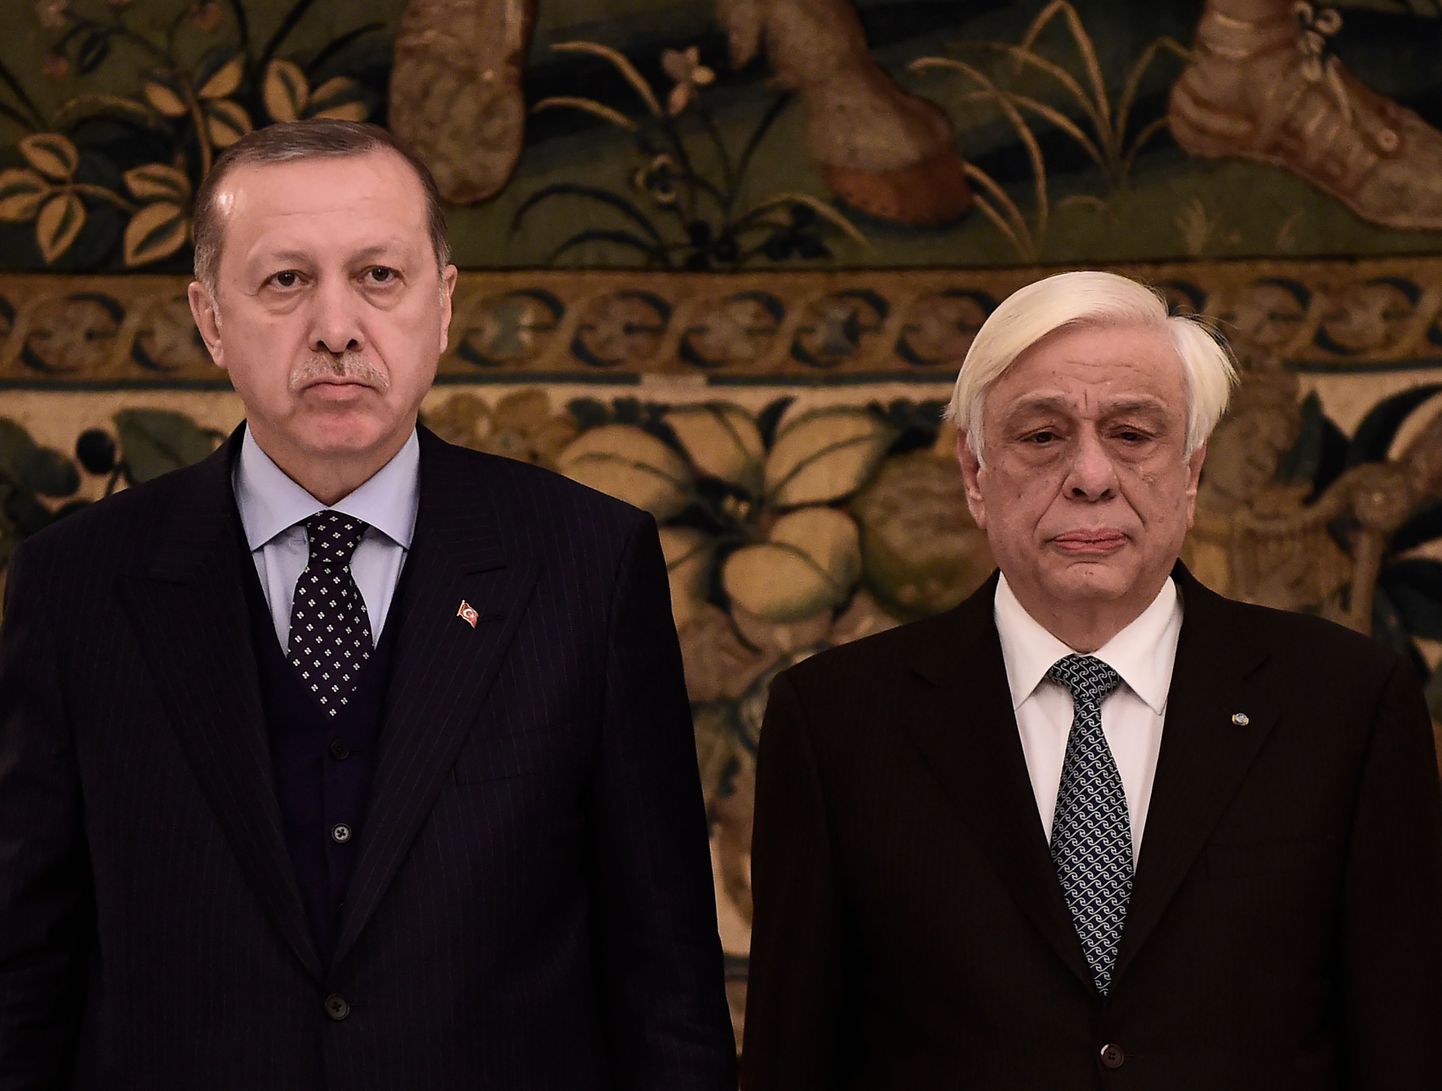 Kreeka president Prokopis Pavlopoulos Türgi presidendi Recep Tayyip Erdoğaniga.